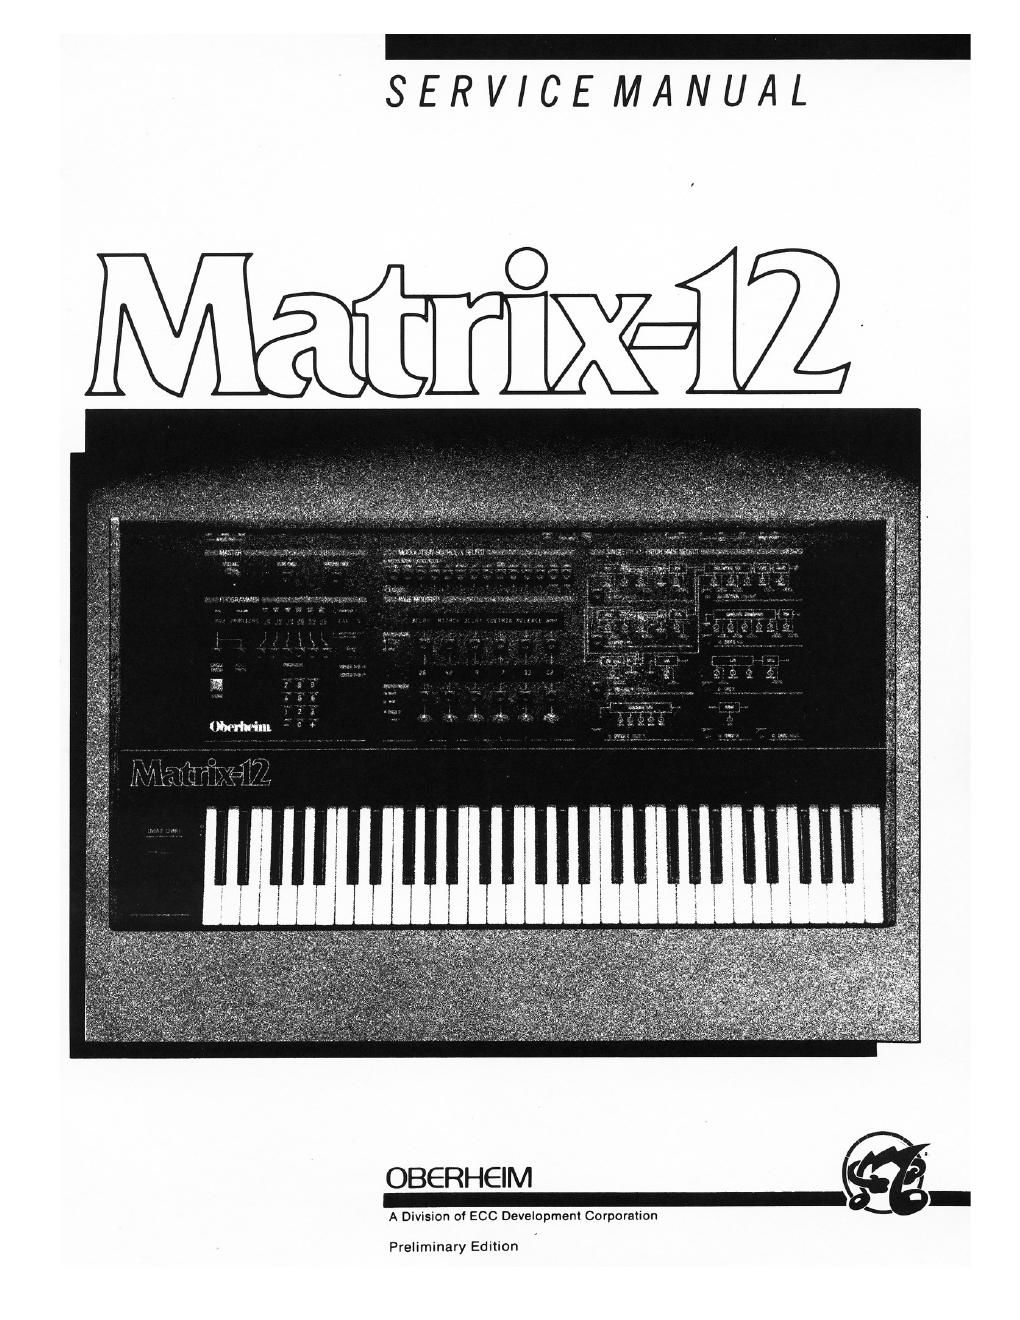 oberheim matrix 12 service manual